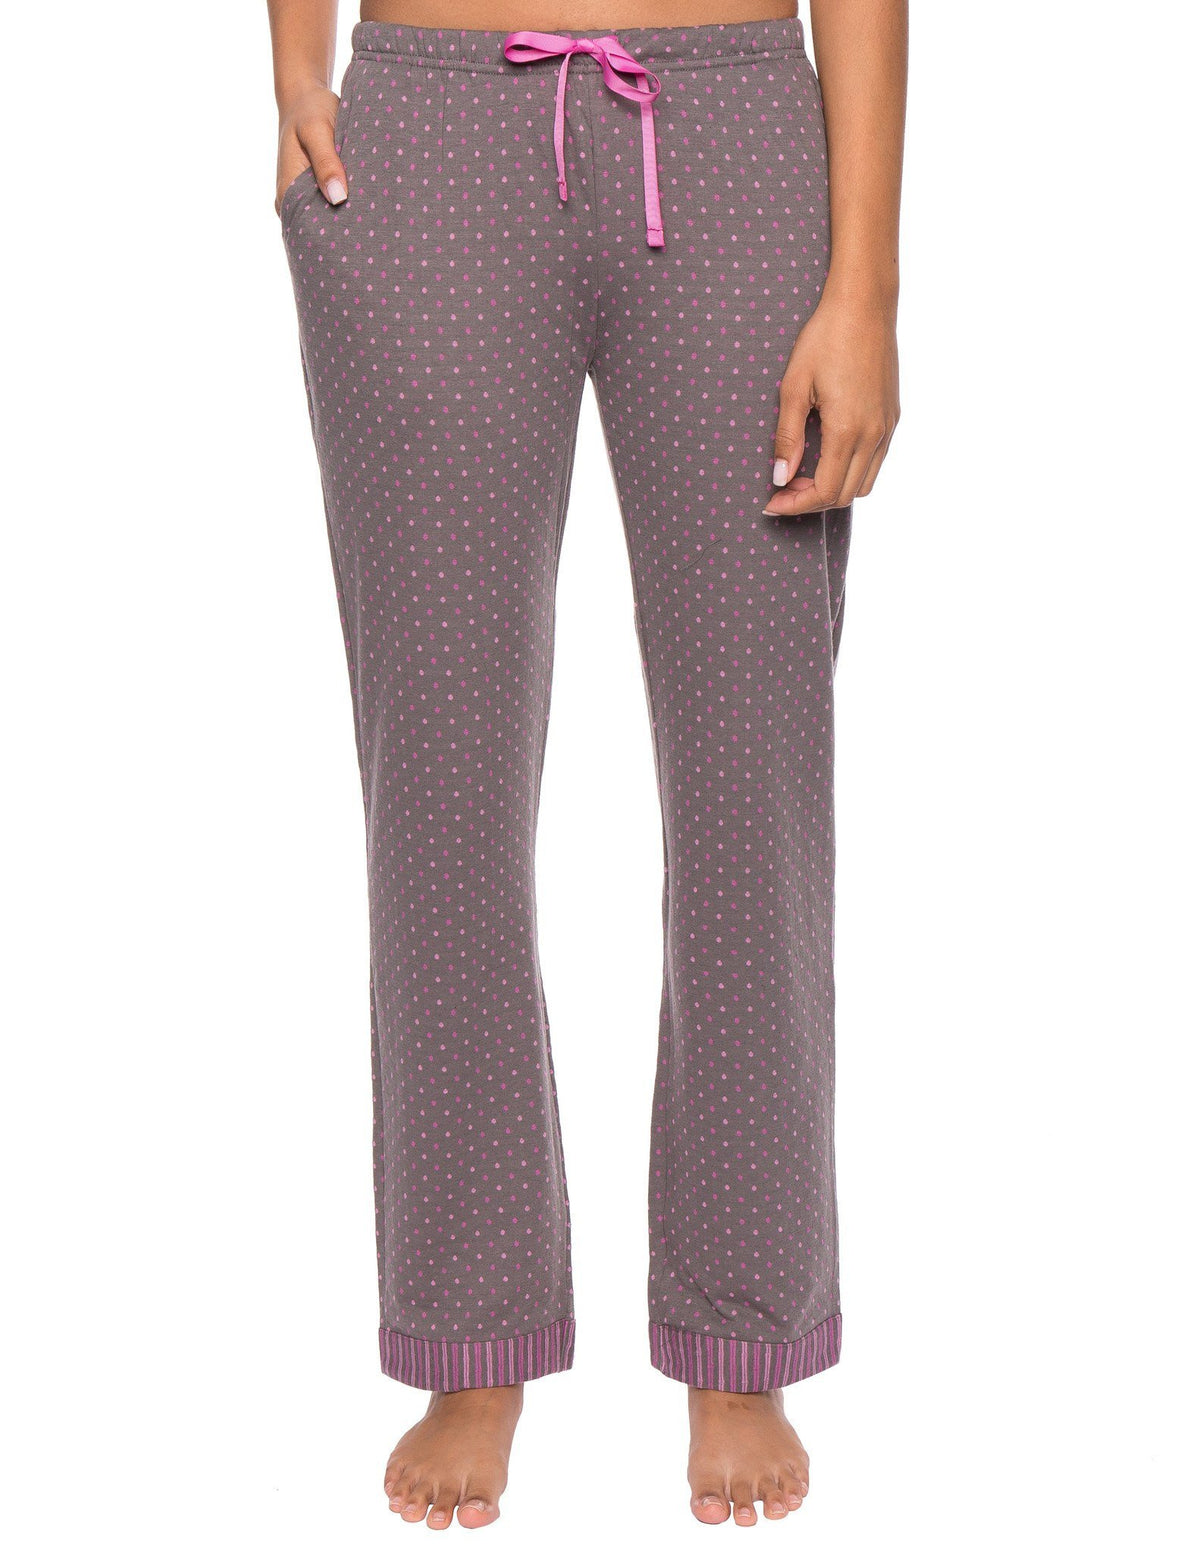 Women's Double Layer Knit Jersey Lounge Pants - Polka Dots Charcoal/Pink